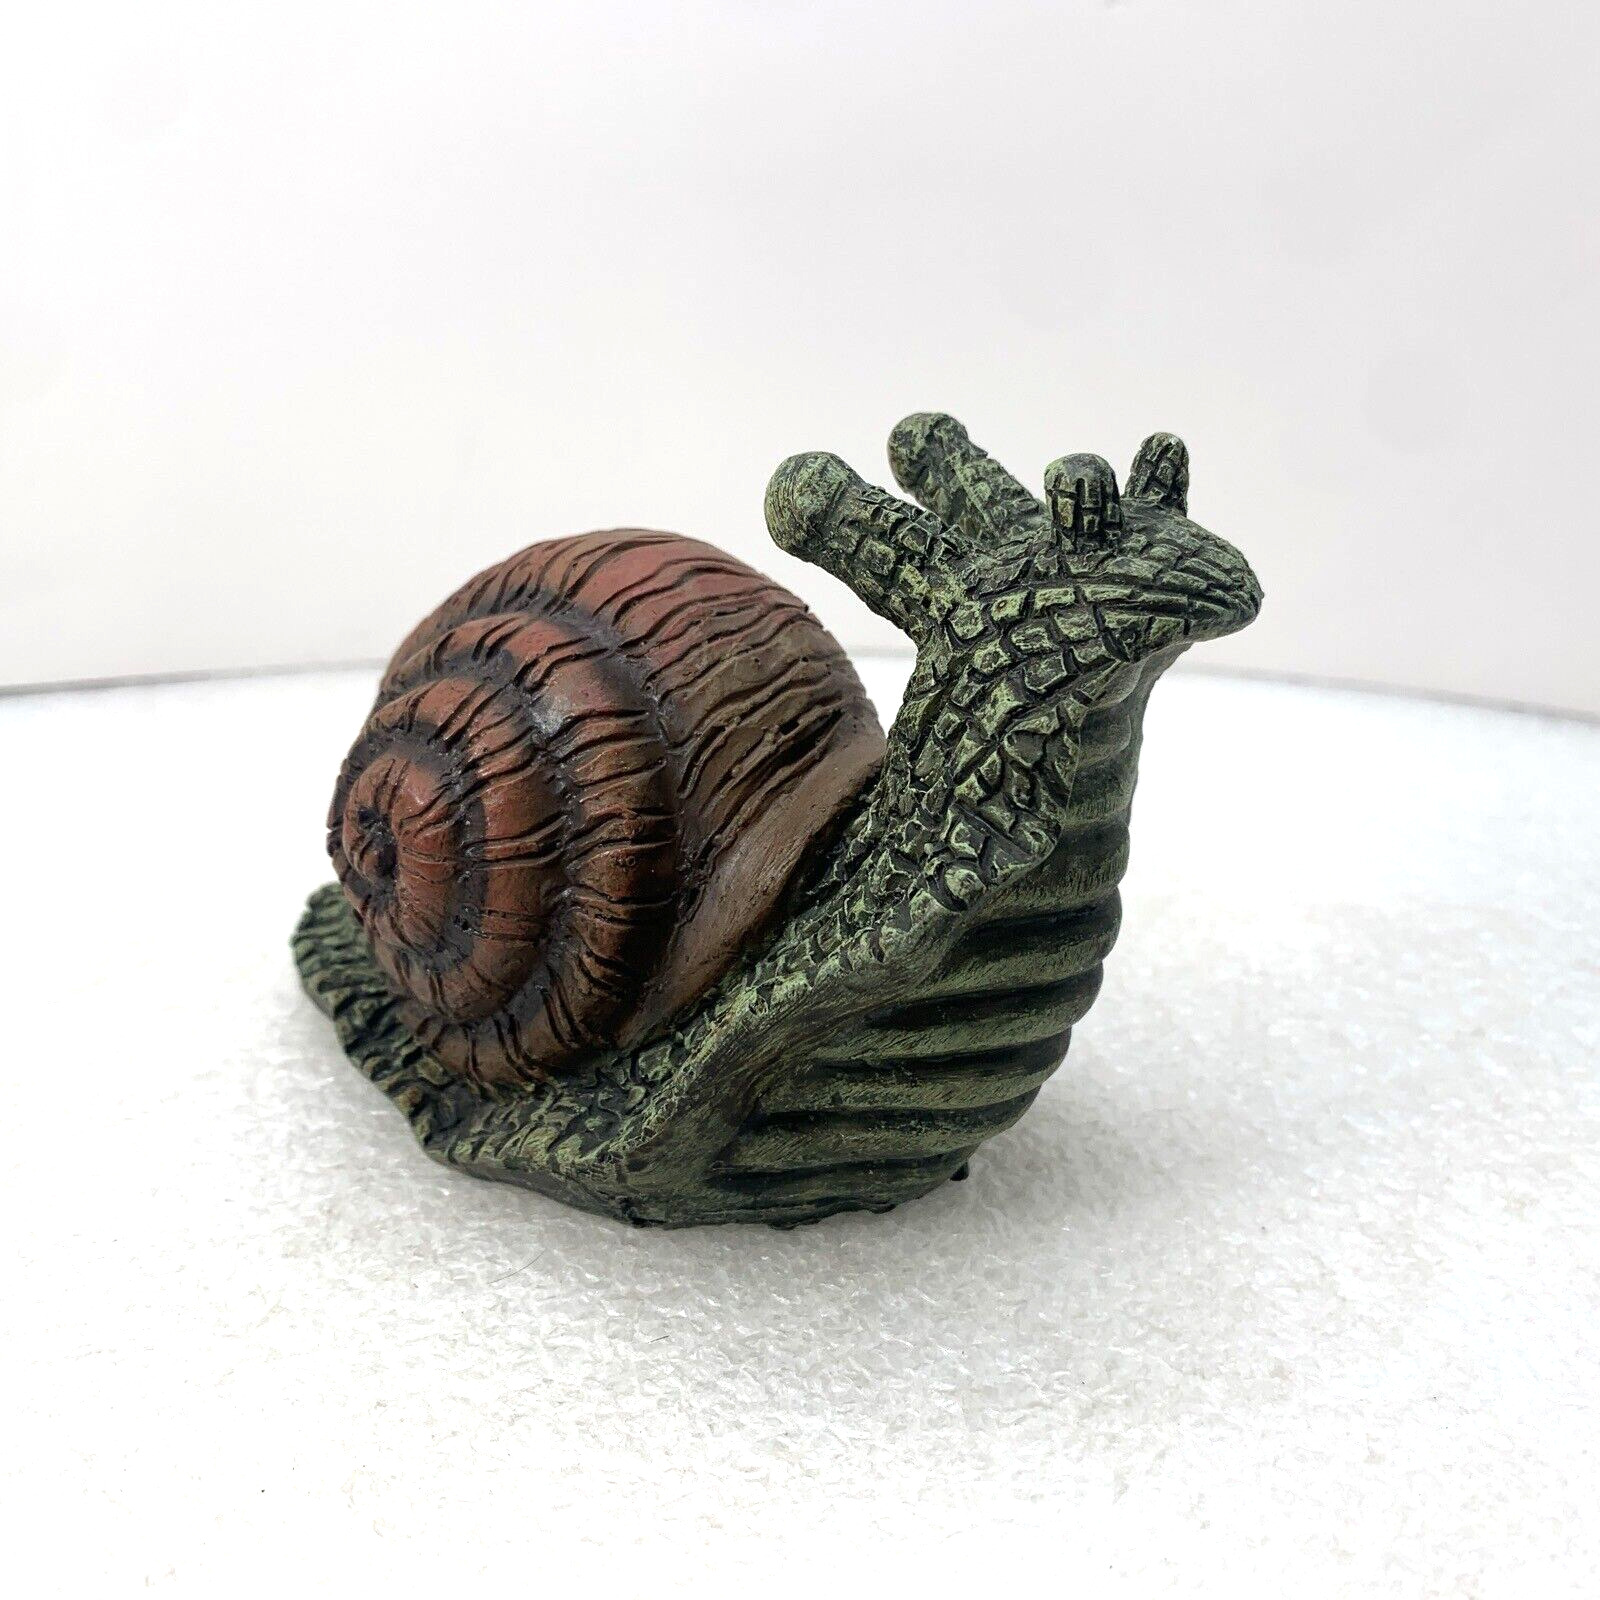 Handpainted Green Brown Snail Resin Sculpture Figurine Yard Garden Decor